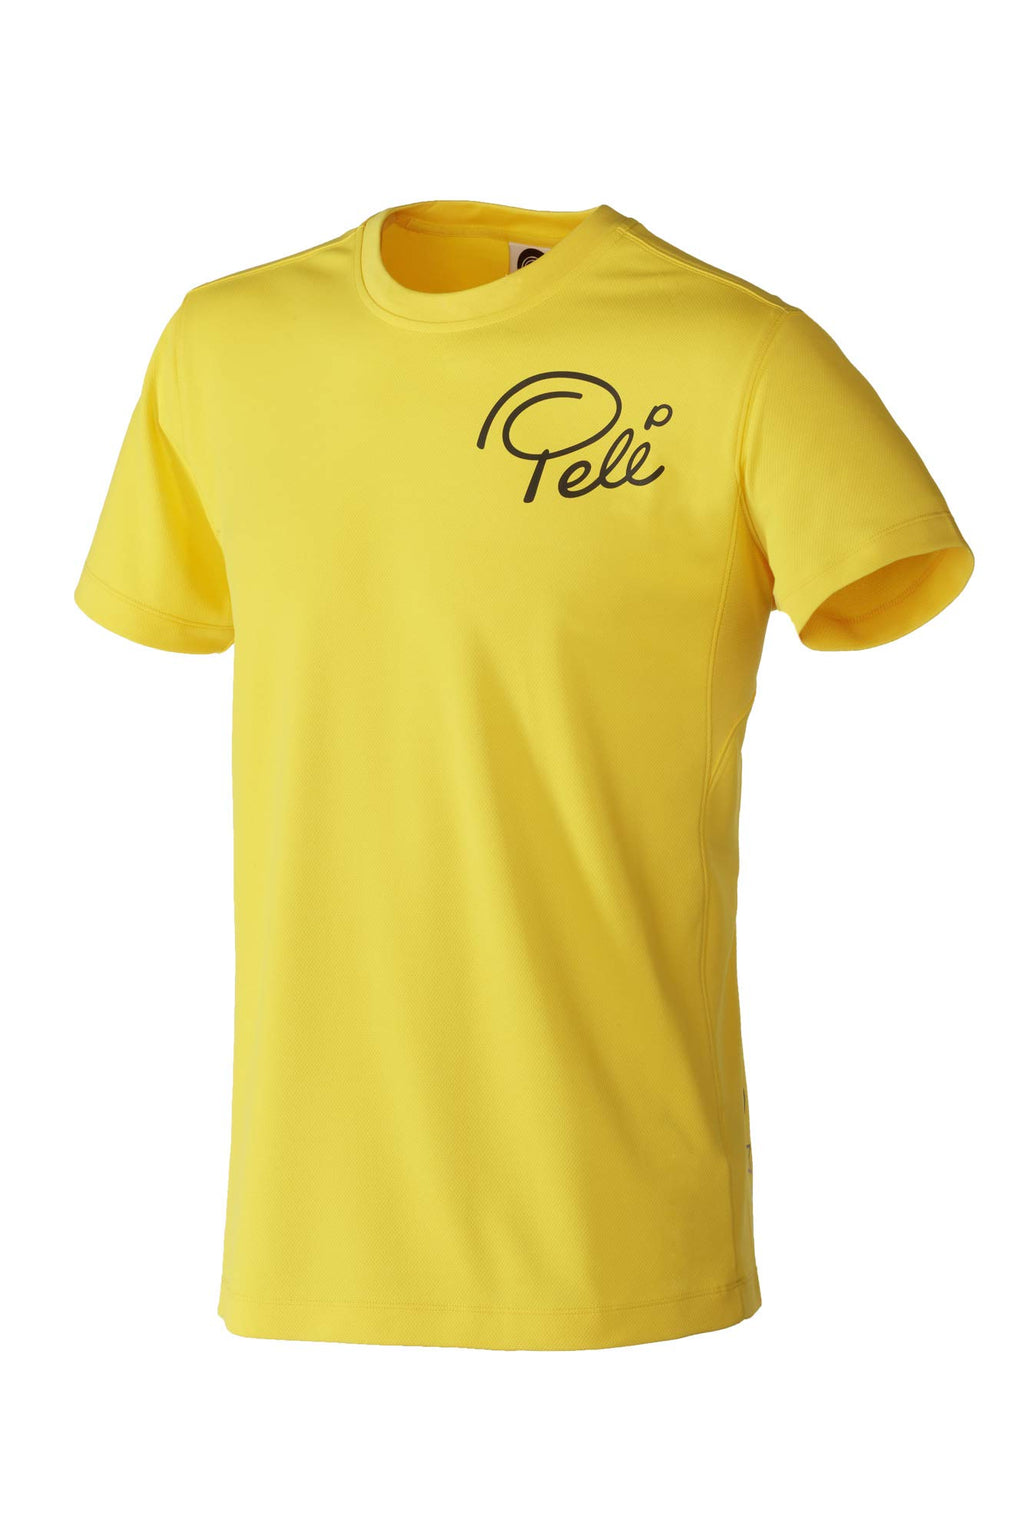 Pele Sports Men's Pele Signature Tee - Yellow